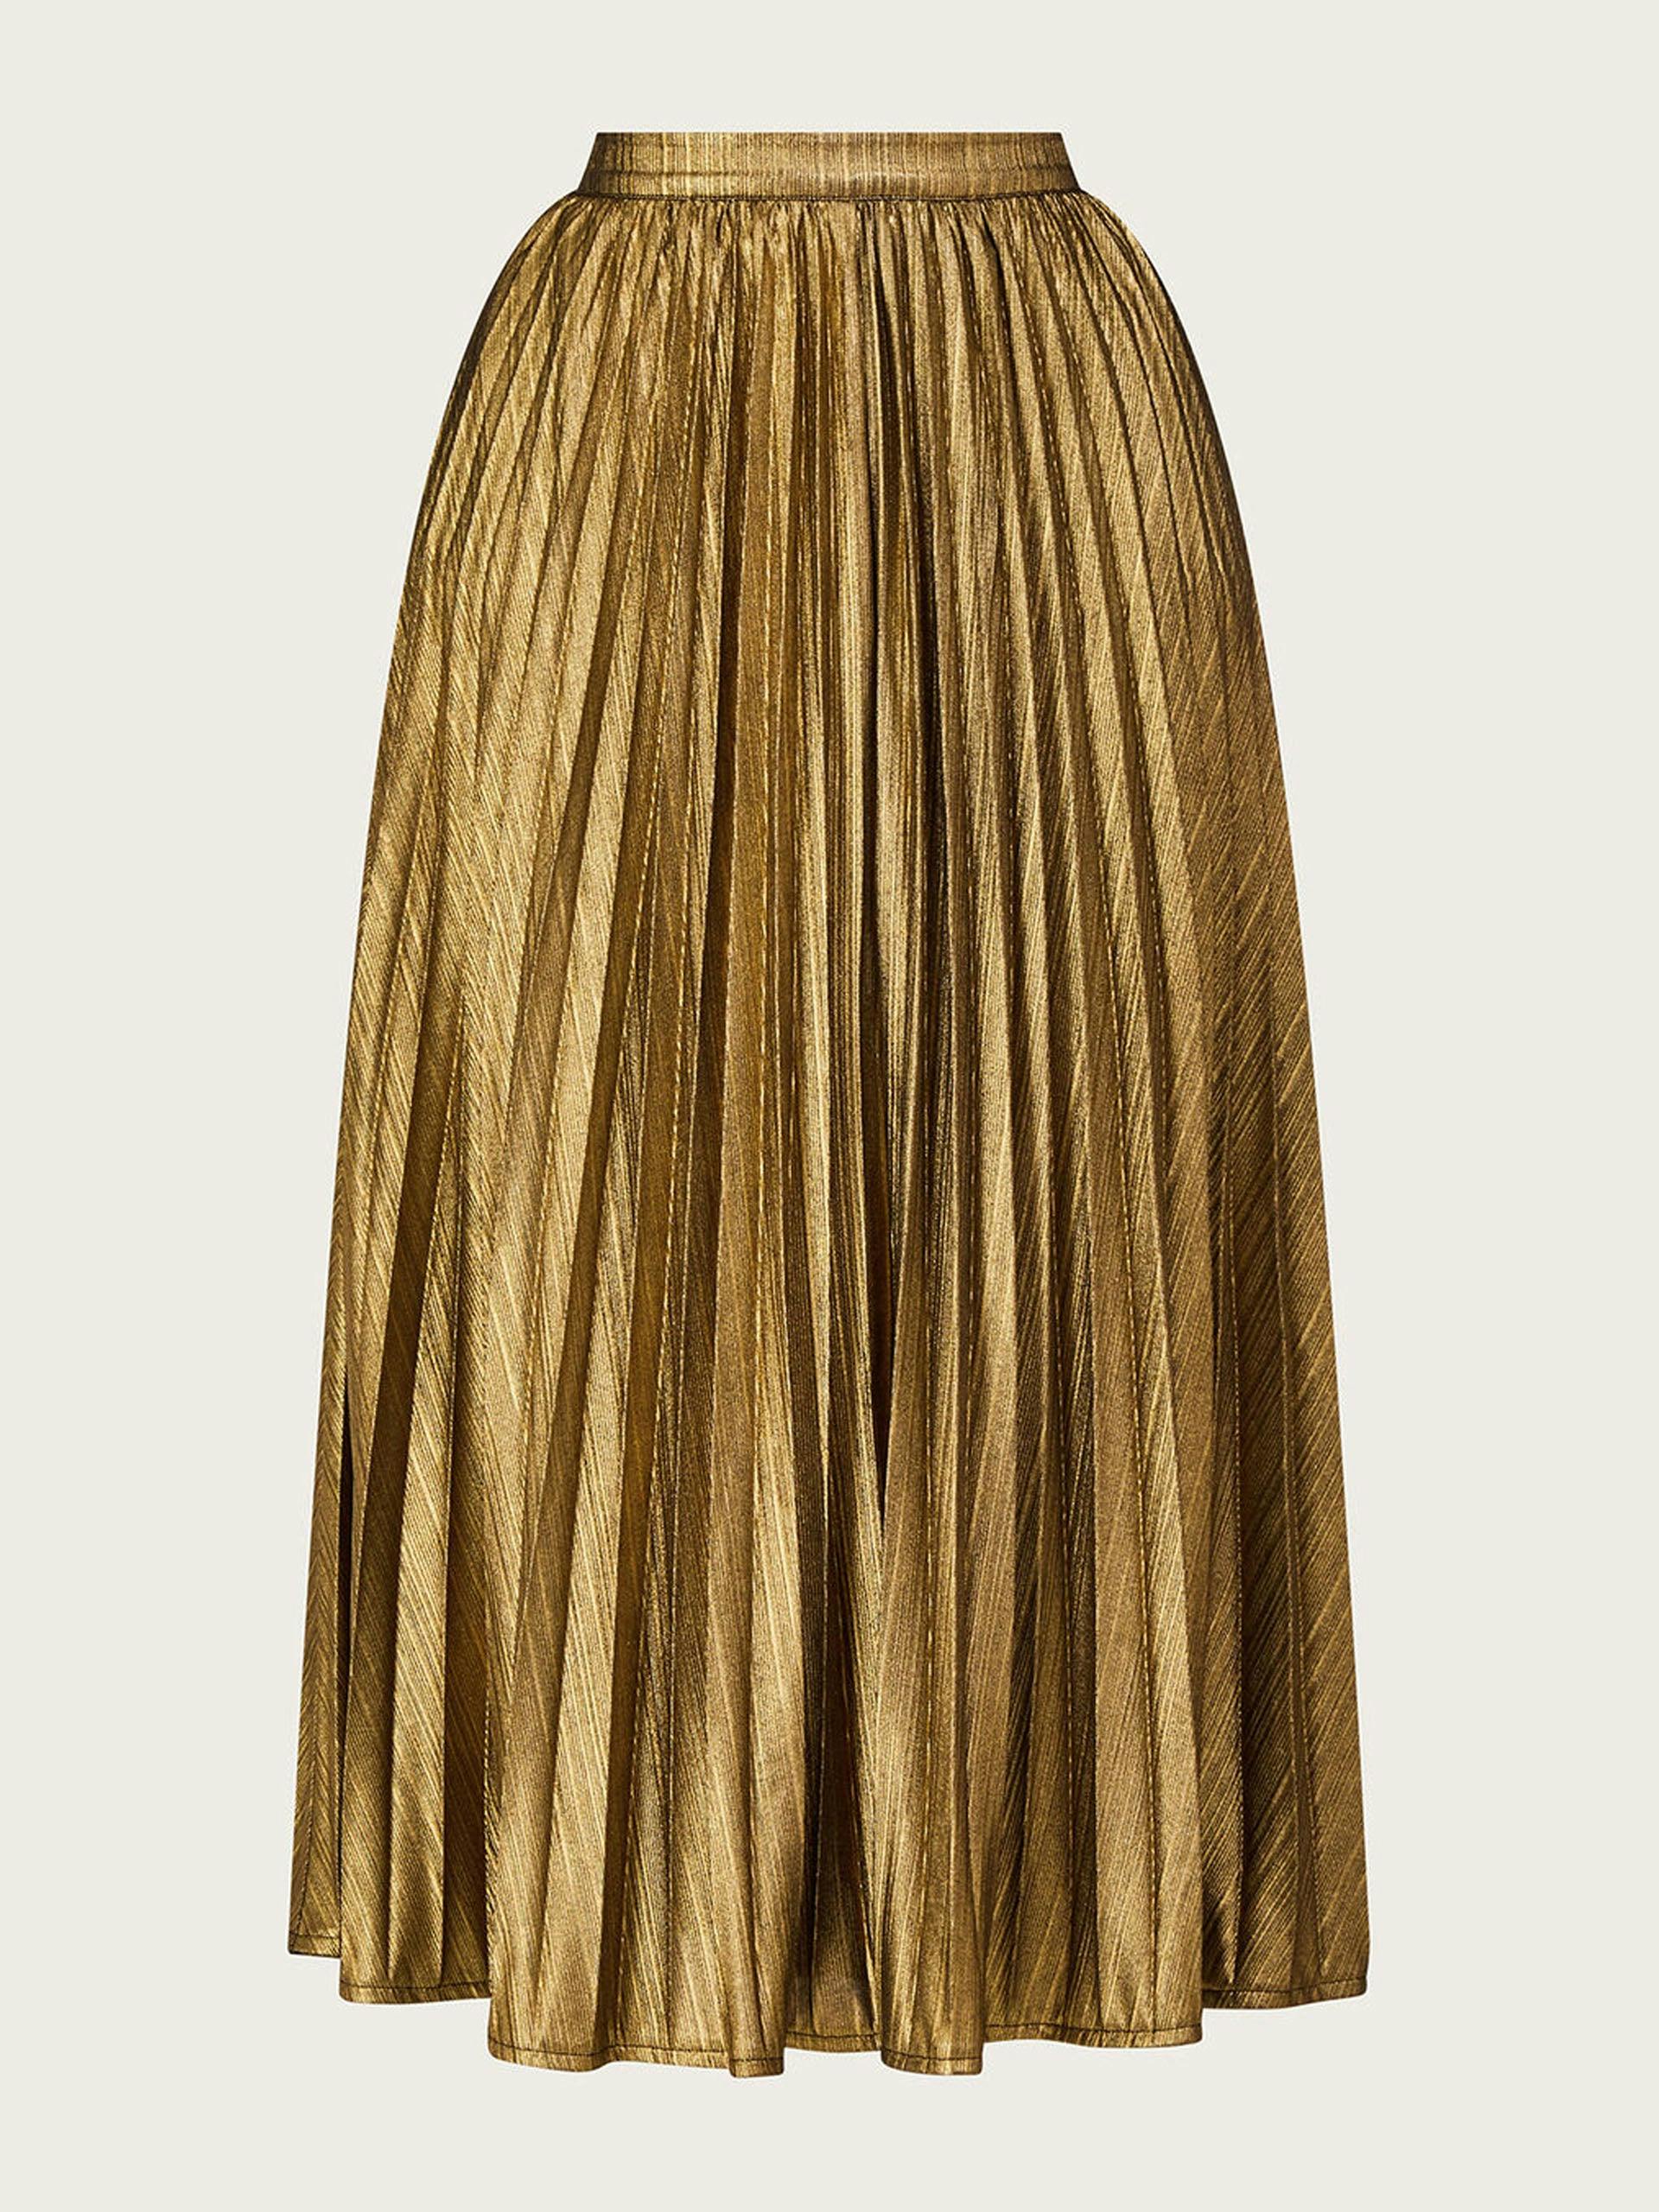 Mia pleated midi skirt in gold